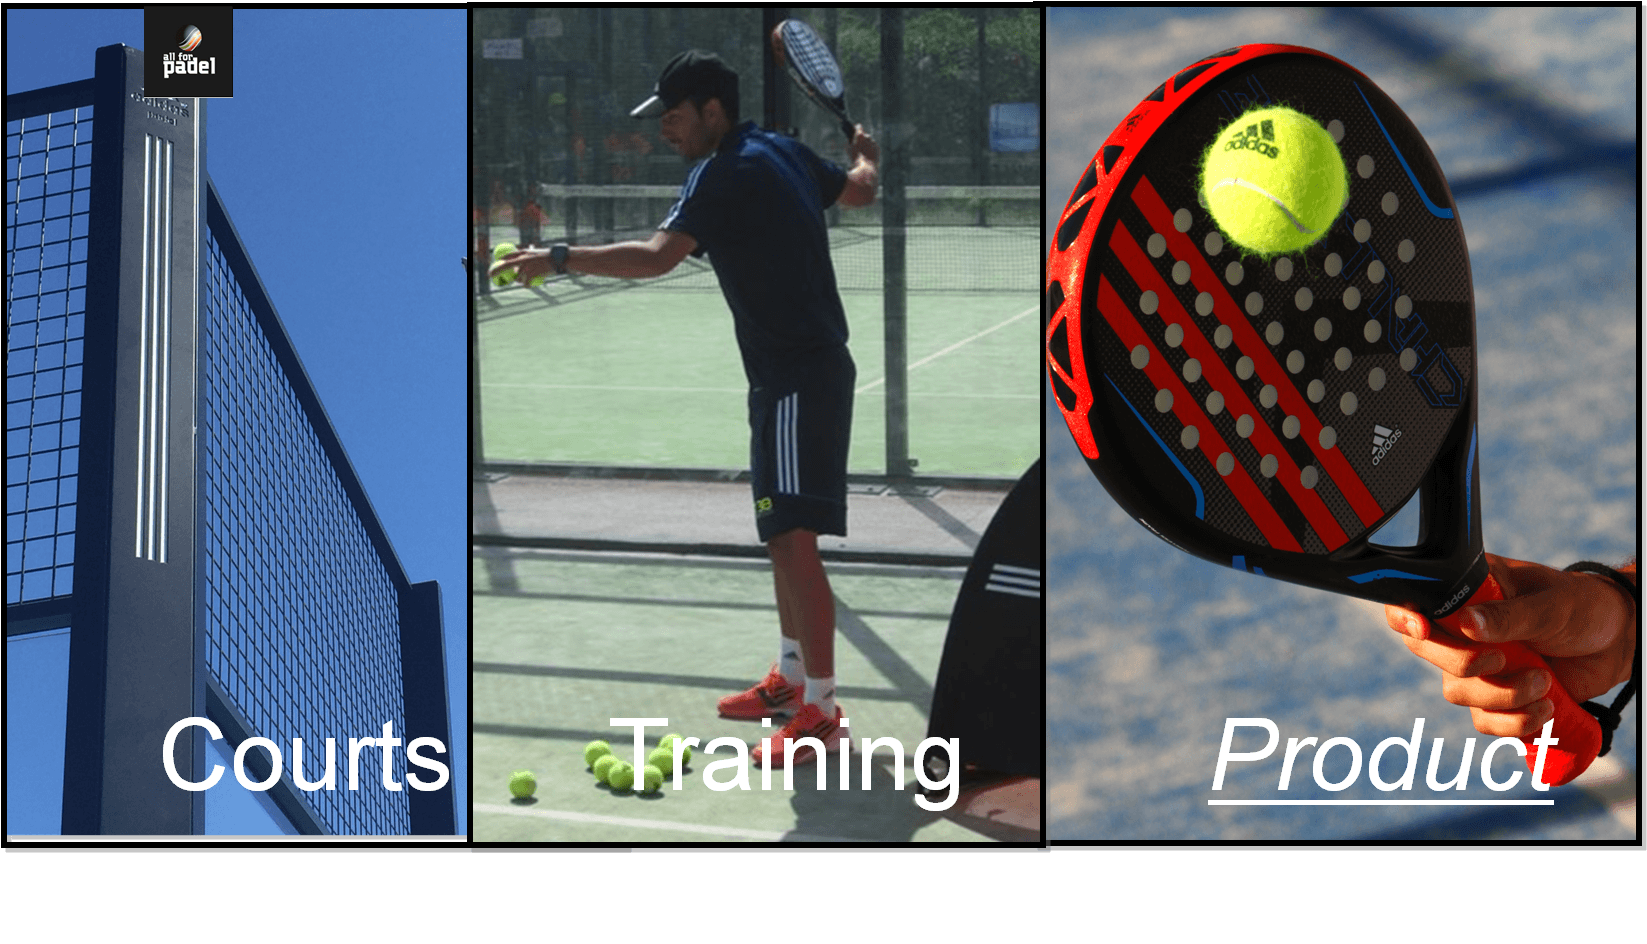 Training padel and teaching